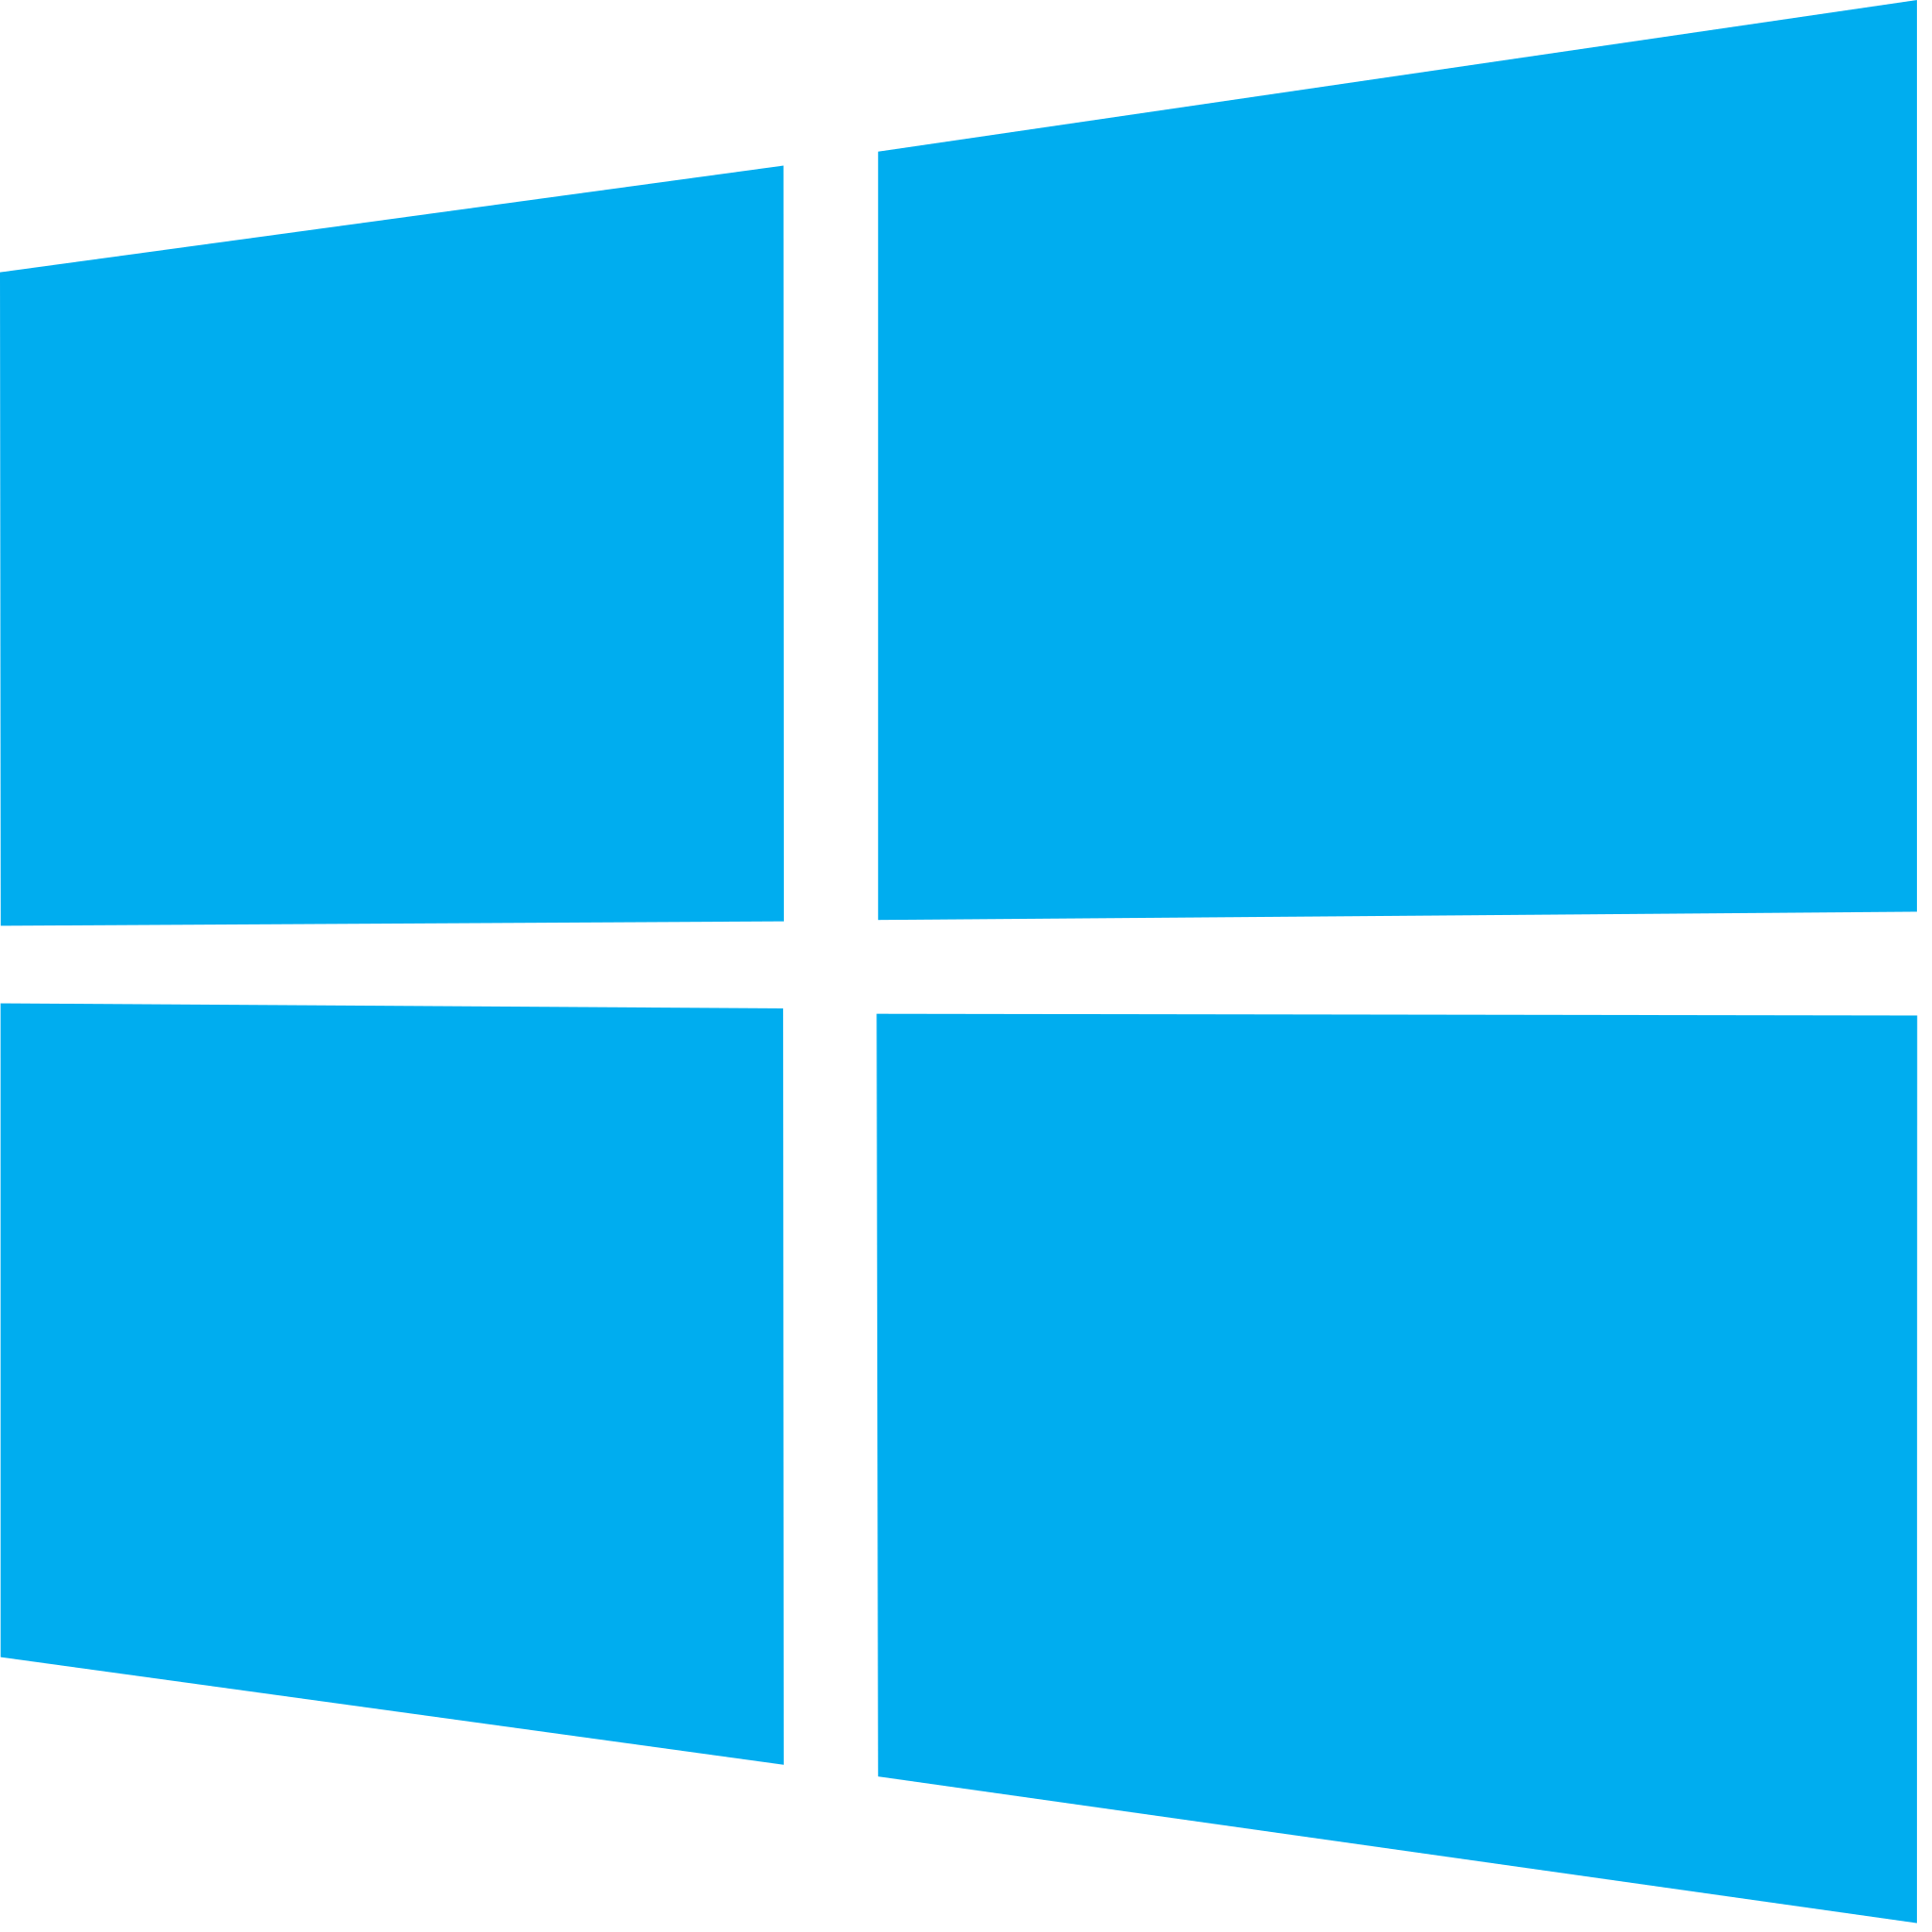 Version Windows